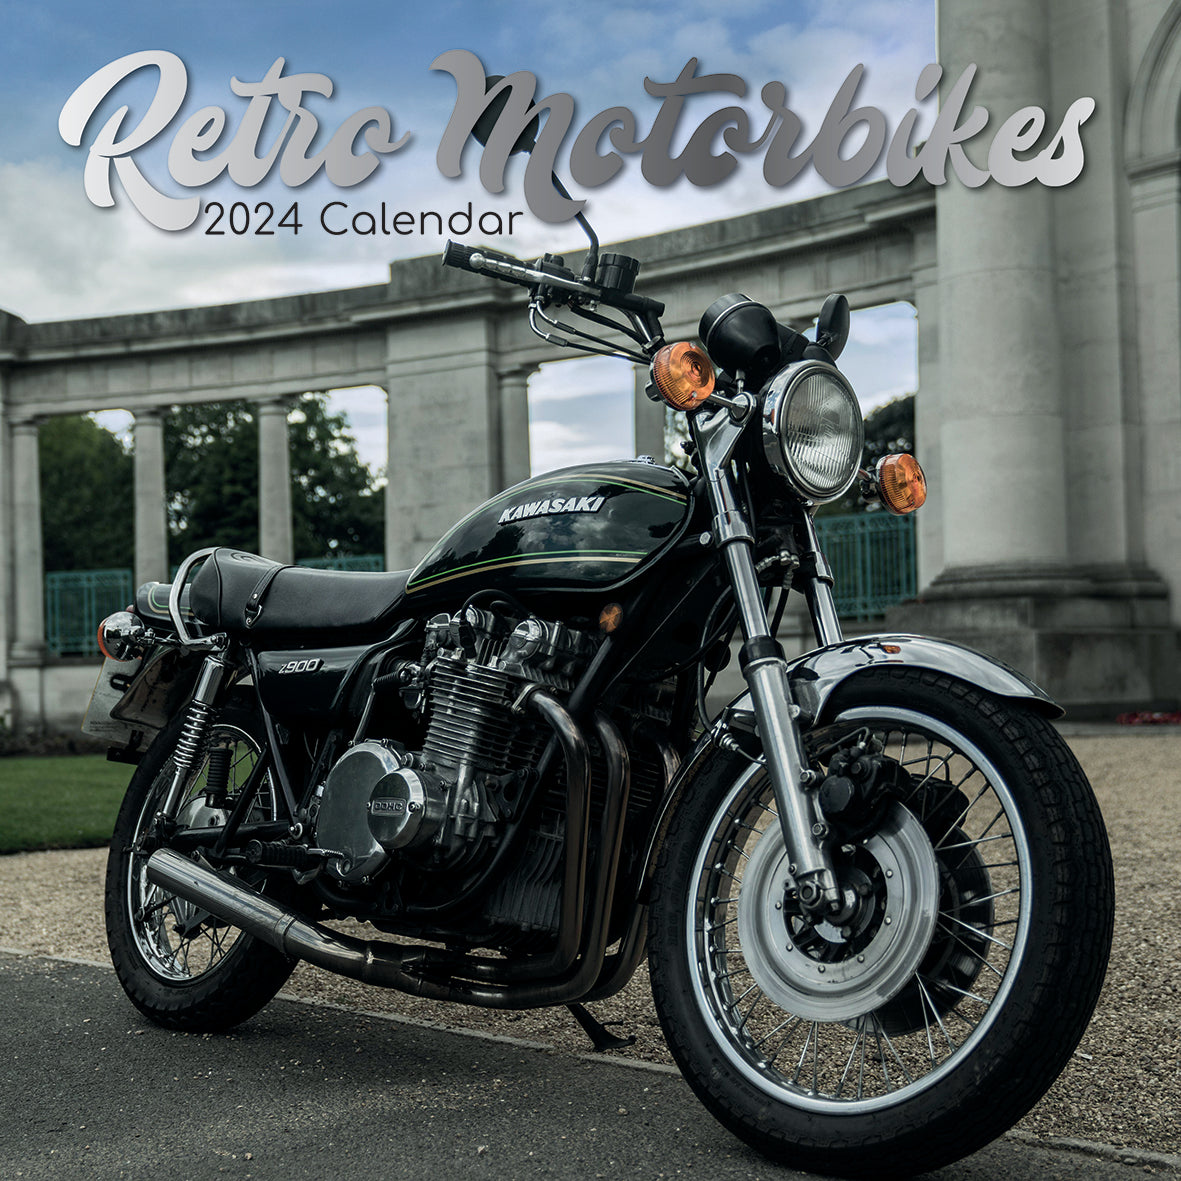 2024 Retro Motorbikes - Square Wall Calendar